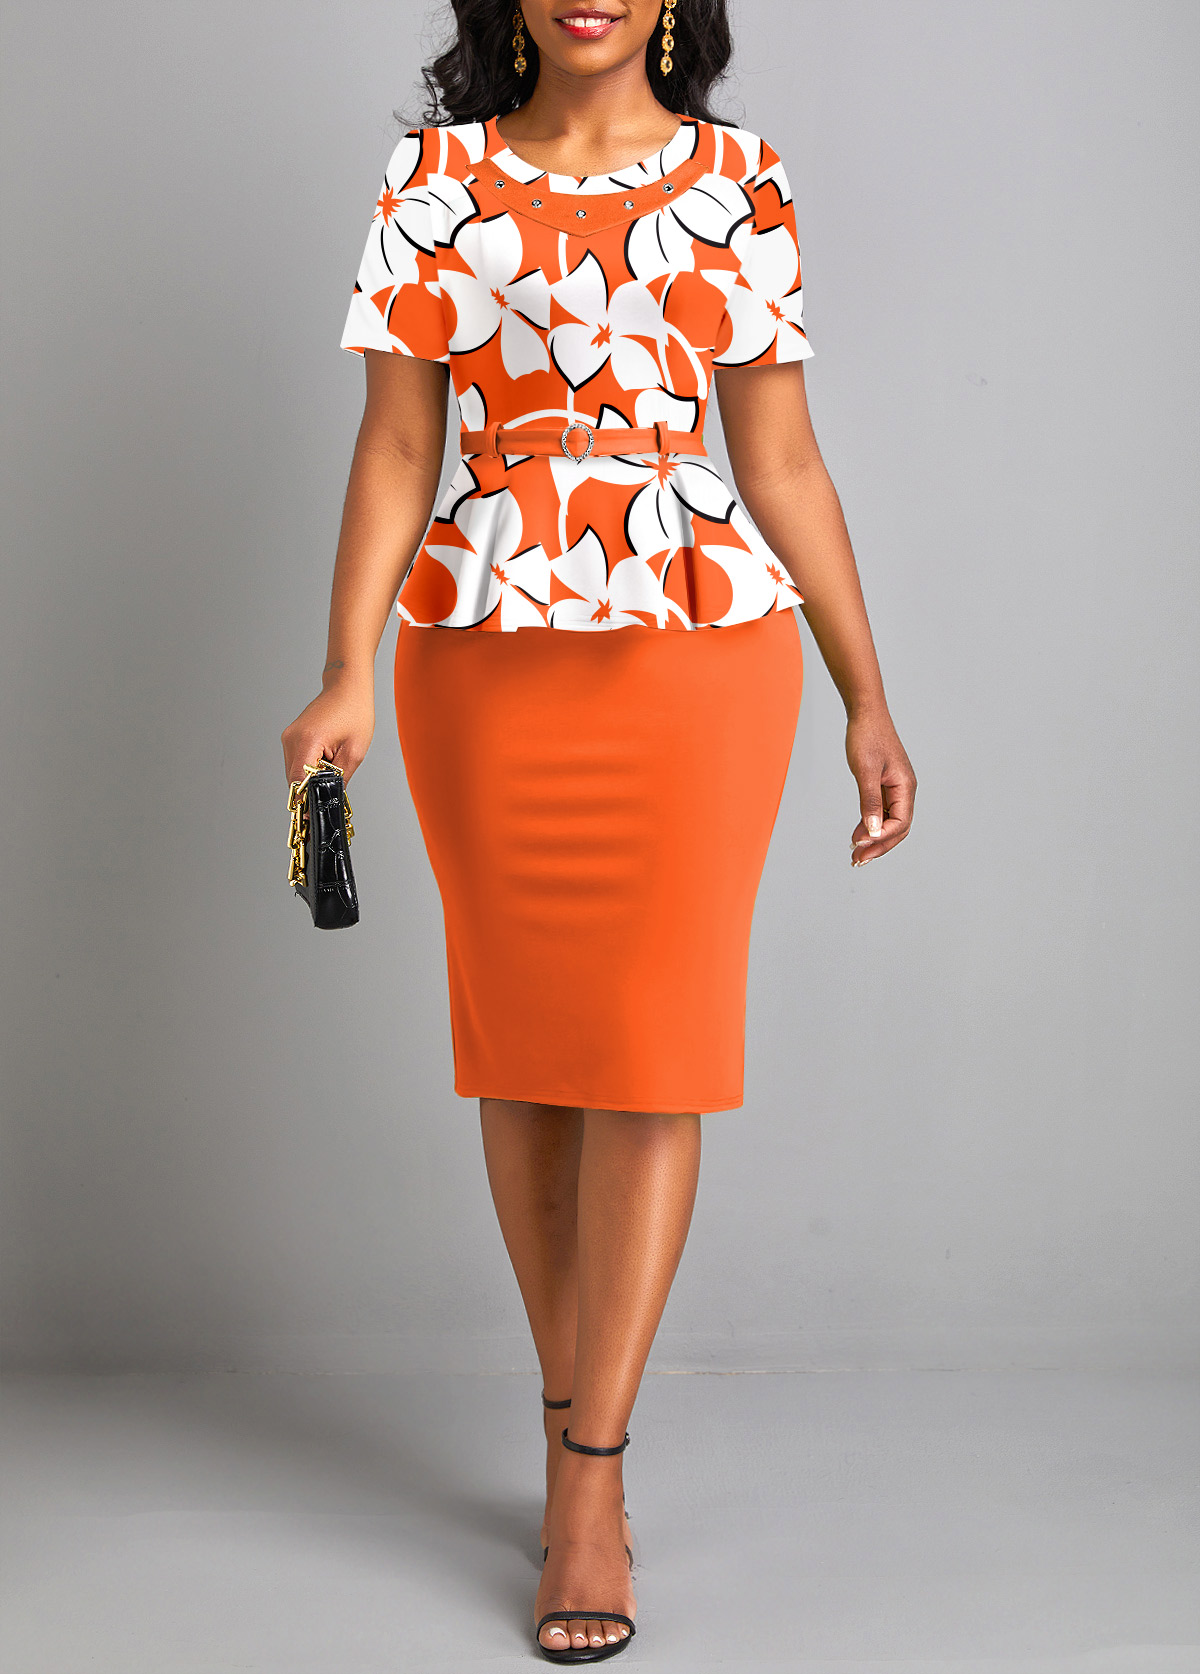 ROTITA Fausse robe moulante 2 en 1 à imprimé fleuri orange avec ceinture